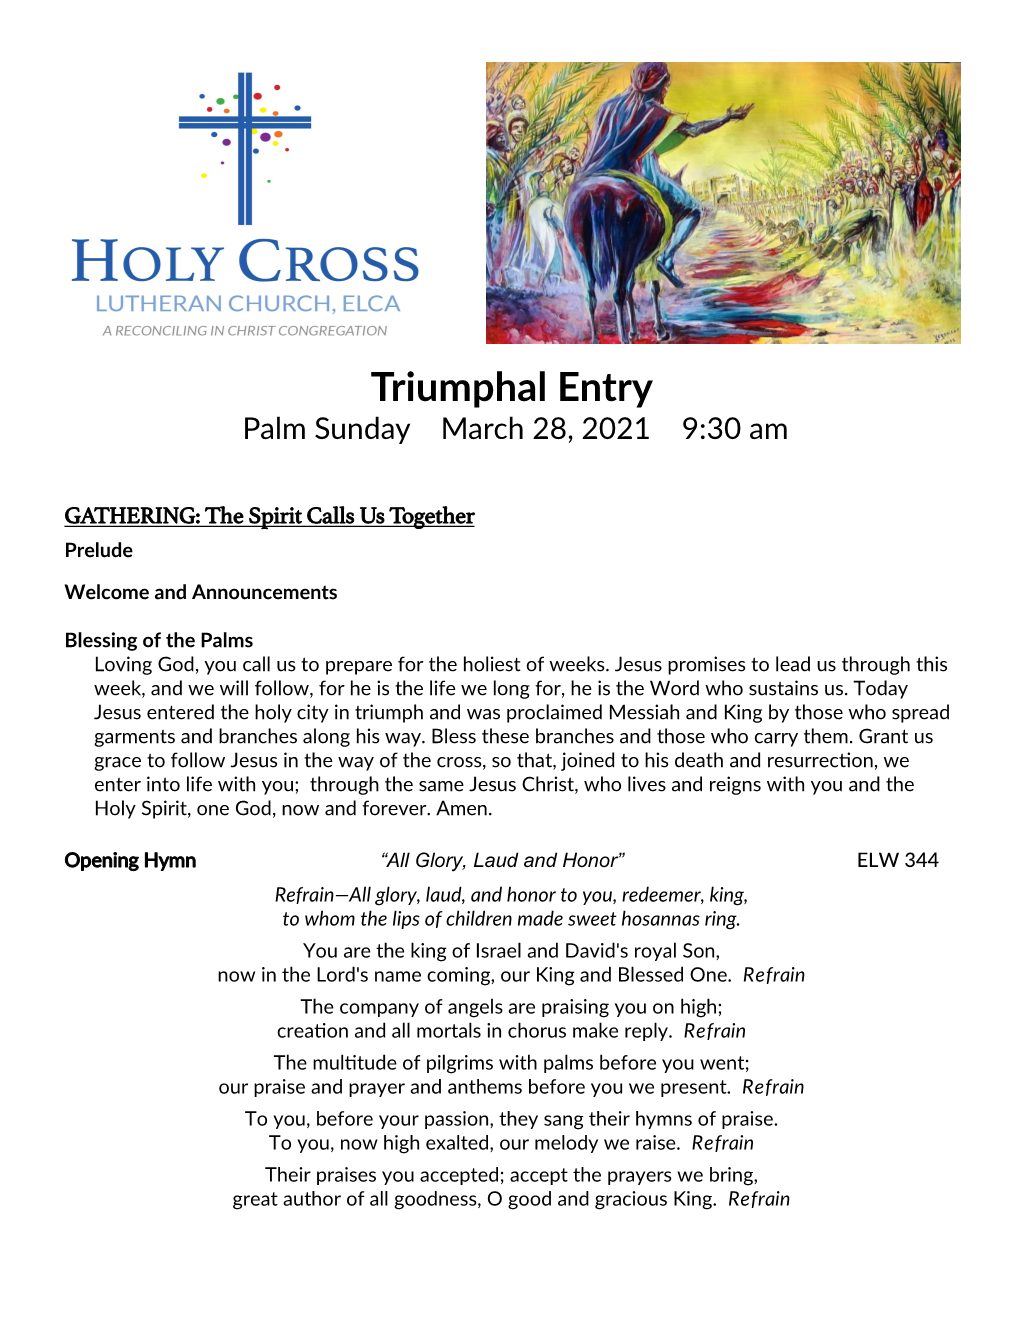 Triumphal Entry Palm Sunday March 28, 2021 9:30 Am